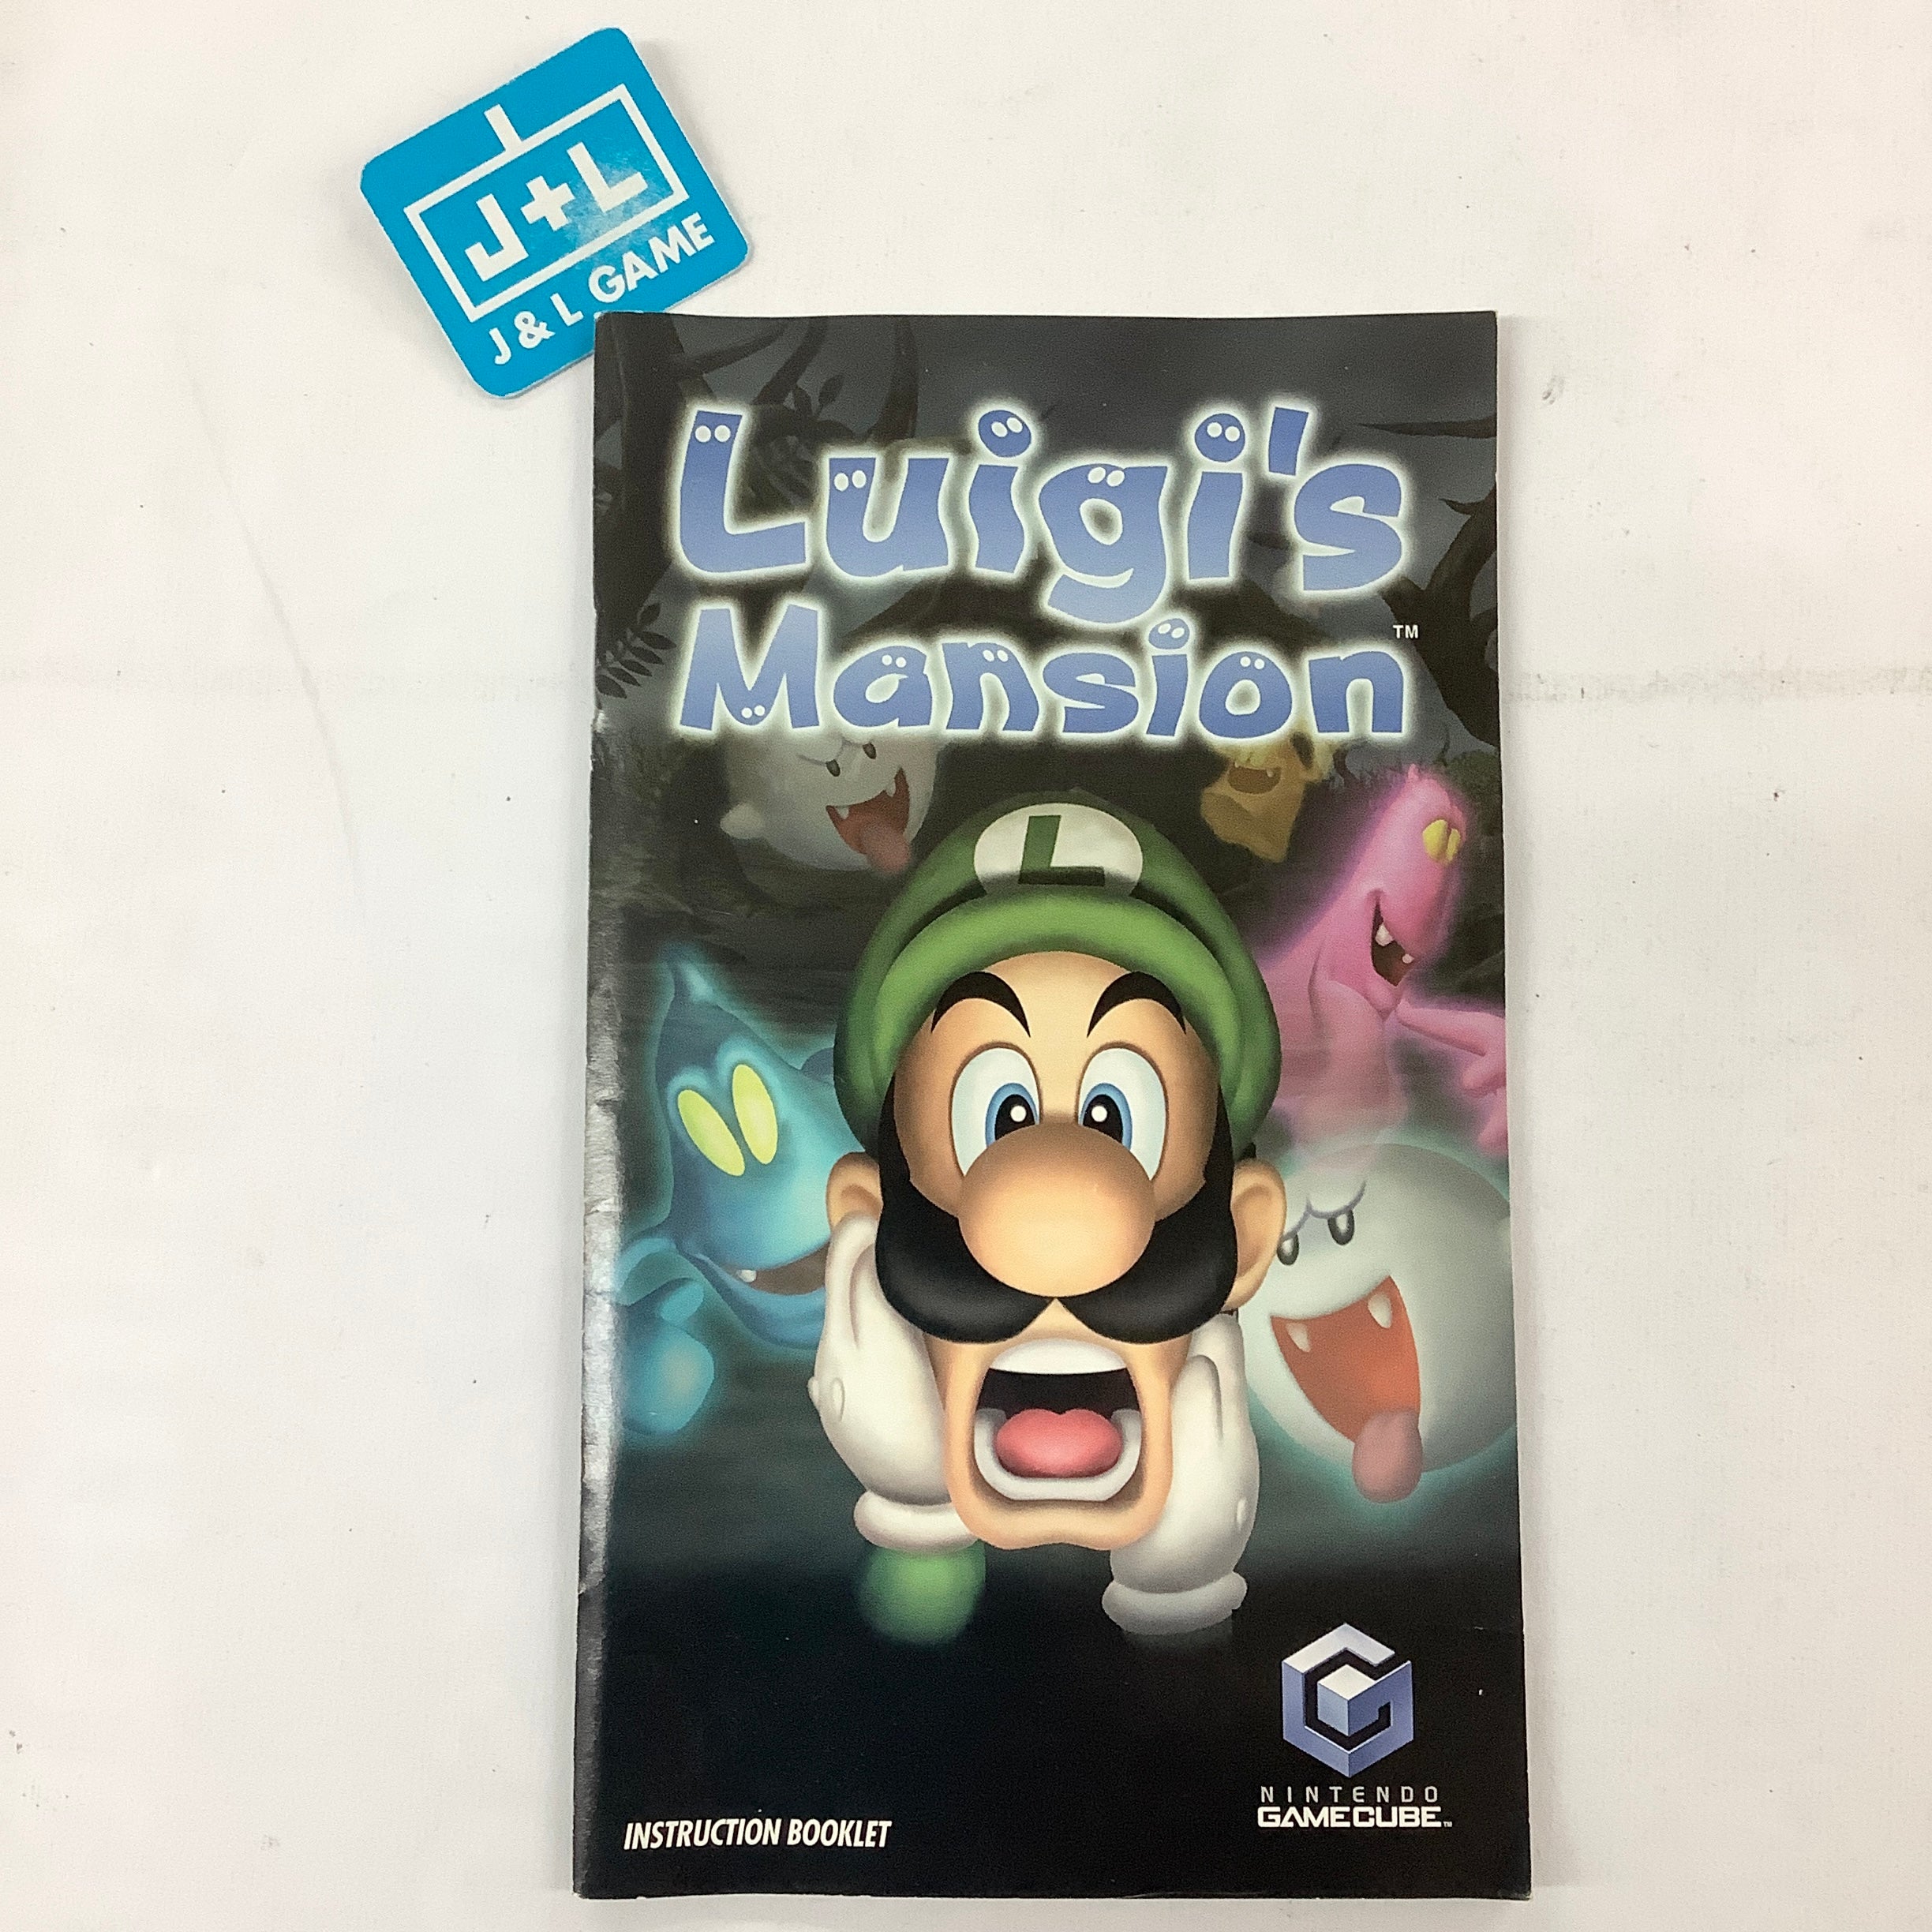 Luigi's Mansion (Player's Choice) - (GC) GameCube [Pre-Owned] Video Games Nintendo   